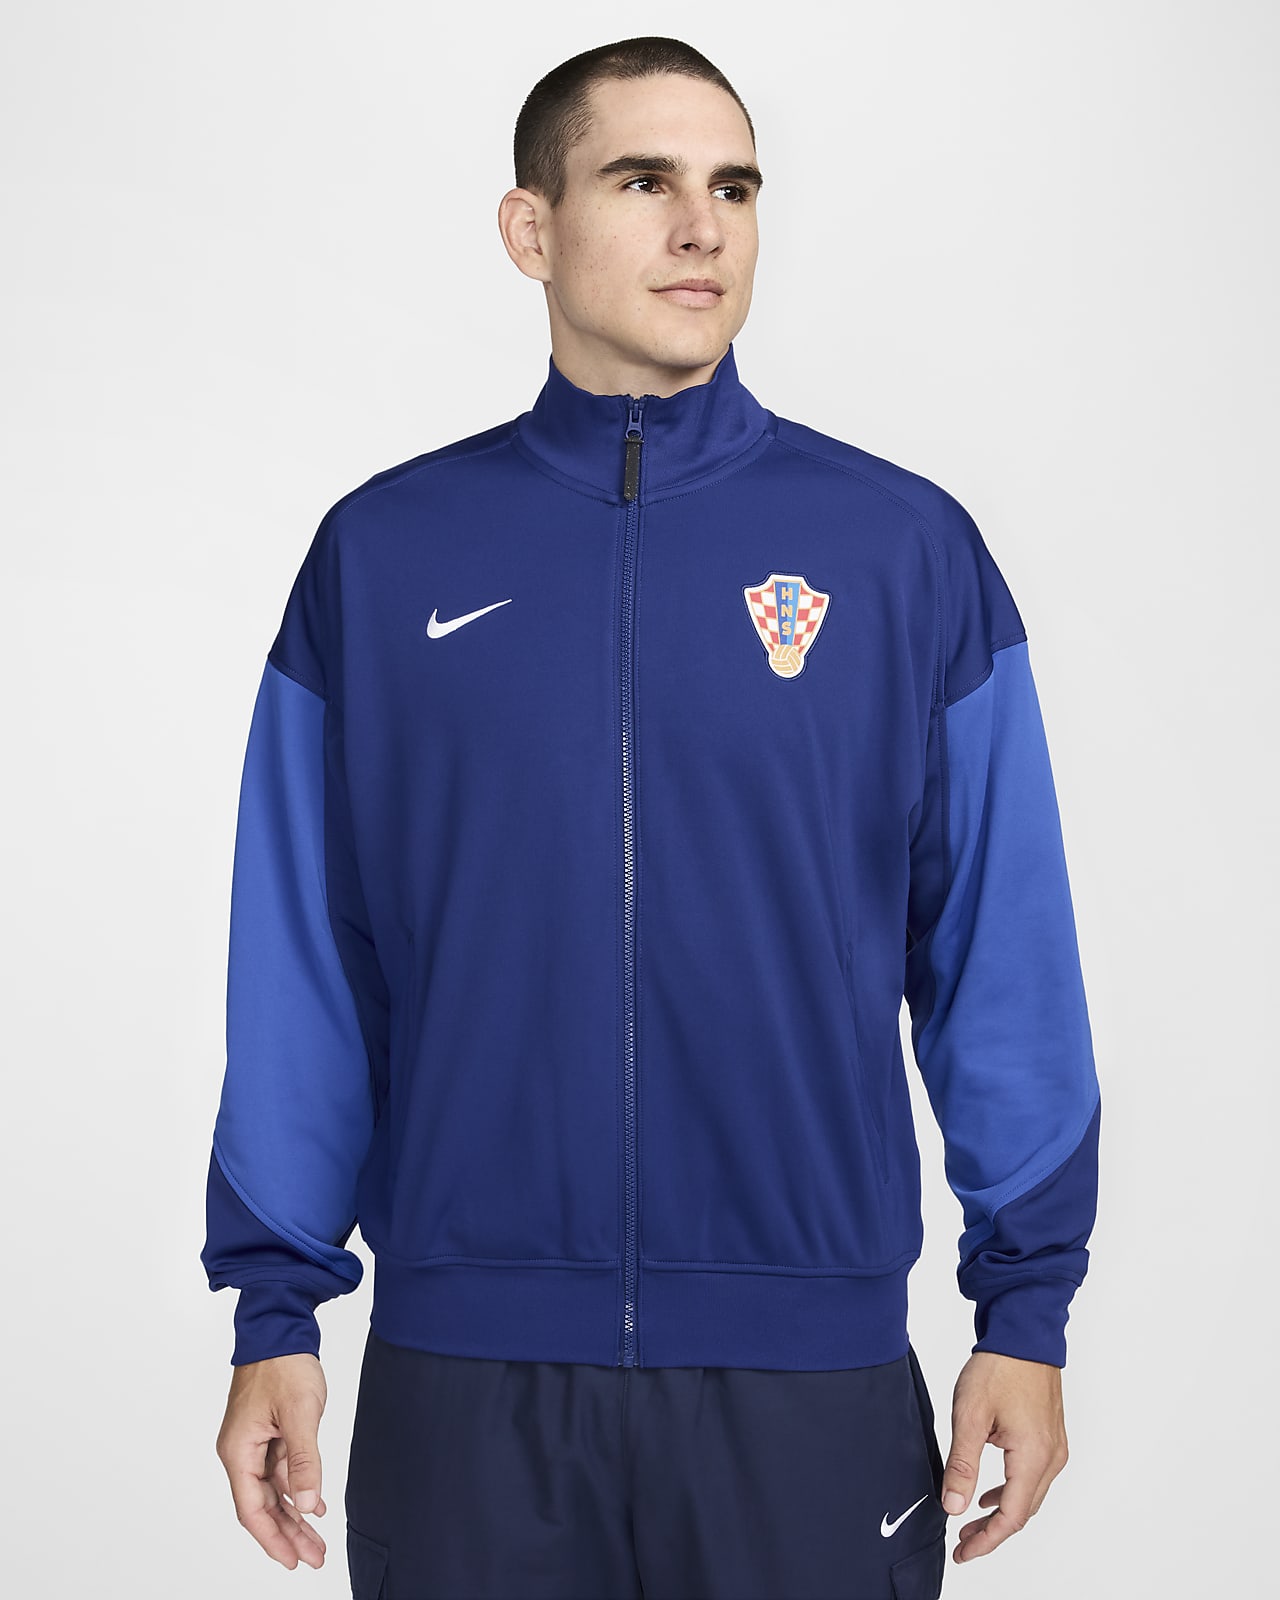 Croatia Academy Pro Men's Nike Football Jacket